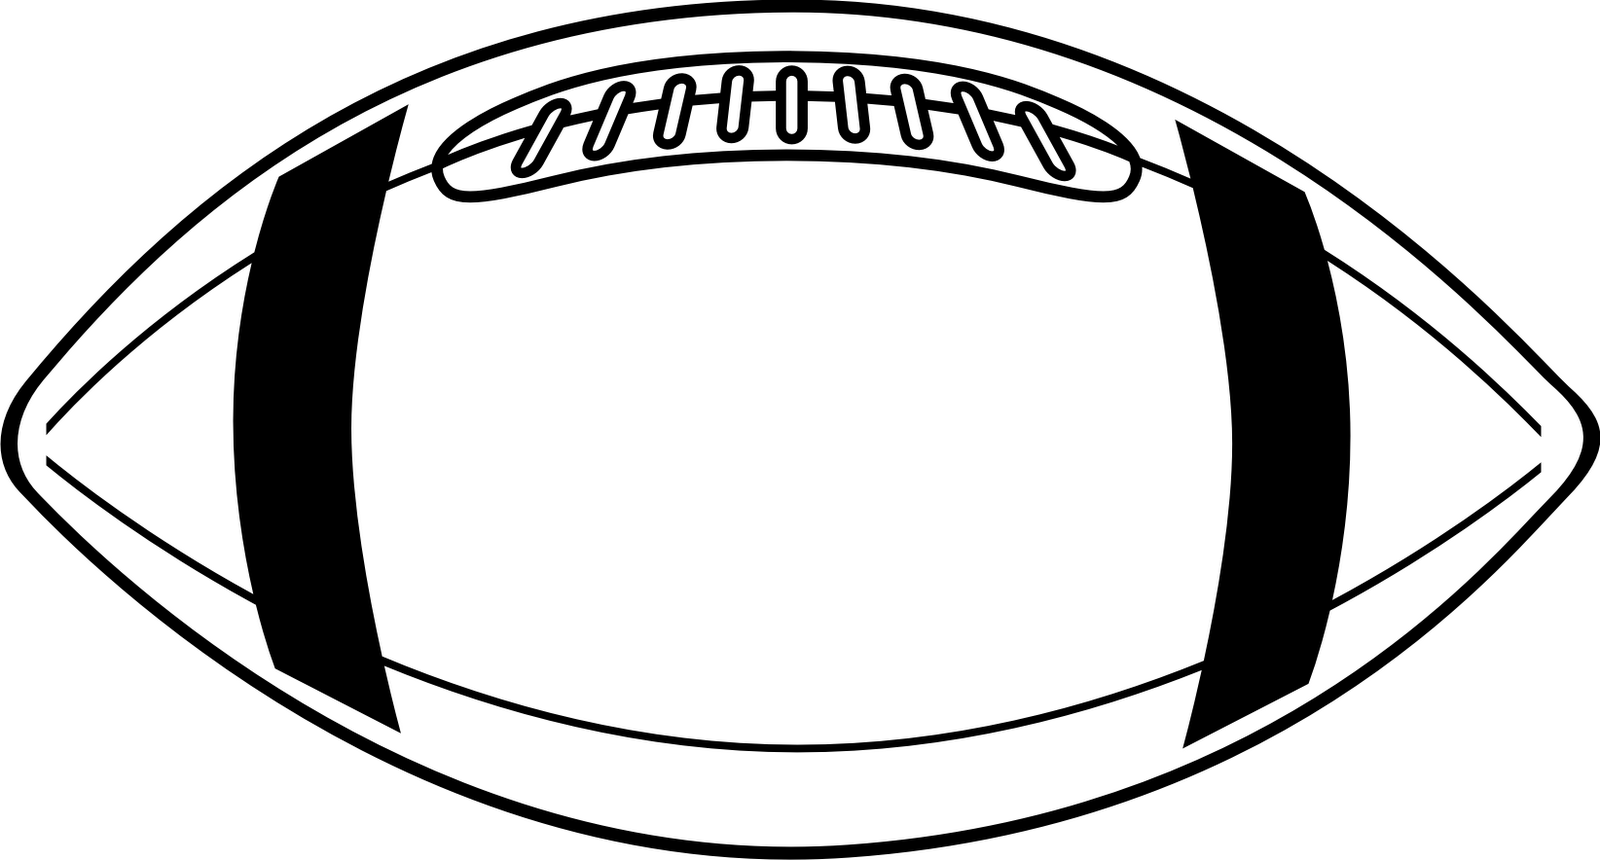 Clip Art Football 9 - Football Outline Clip Art